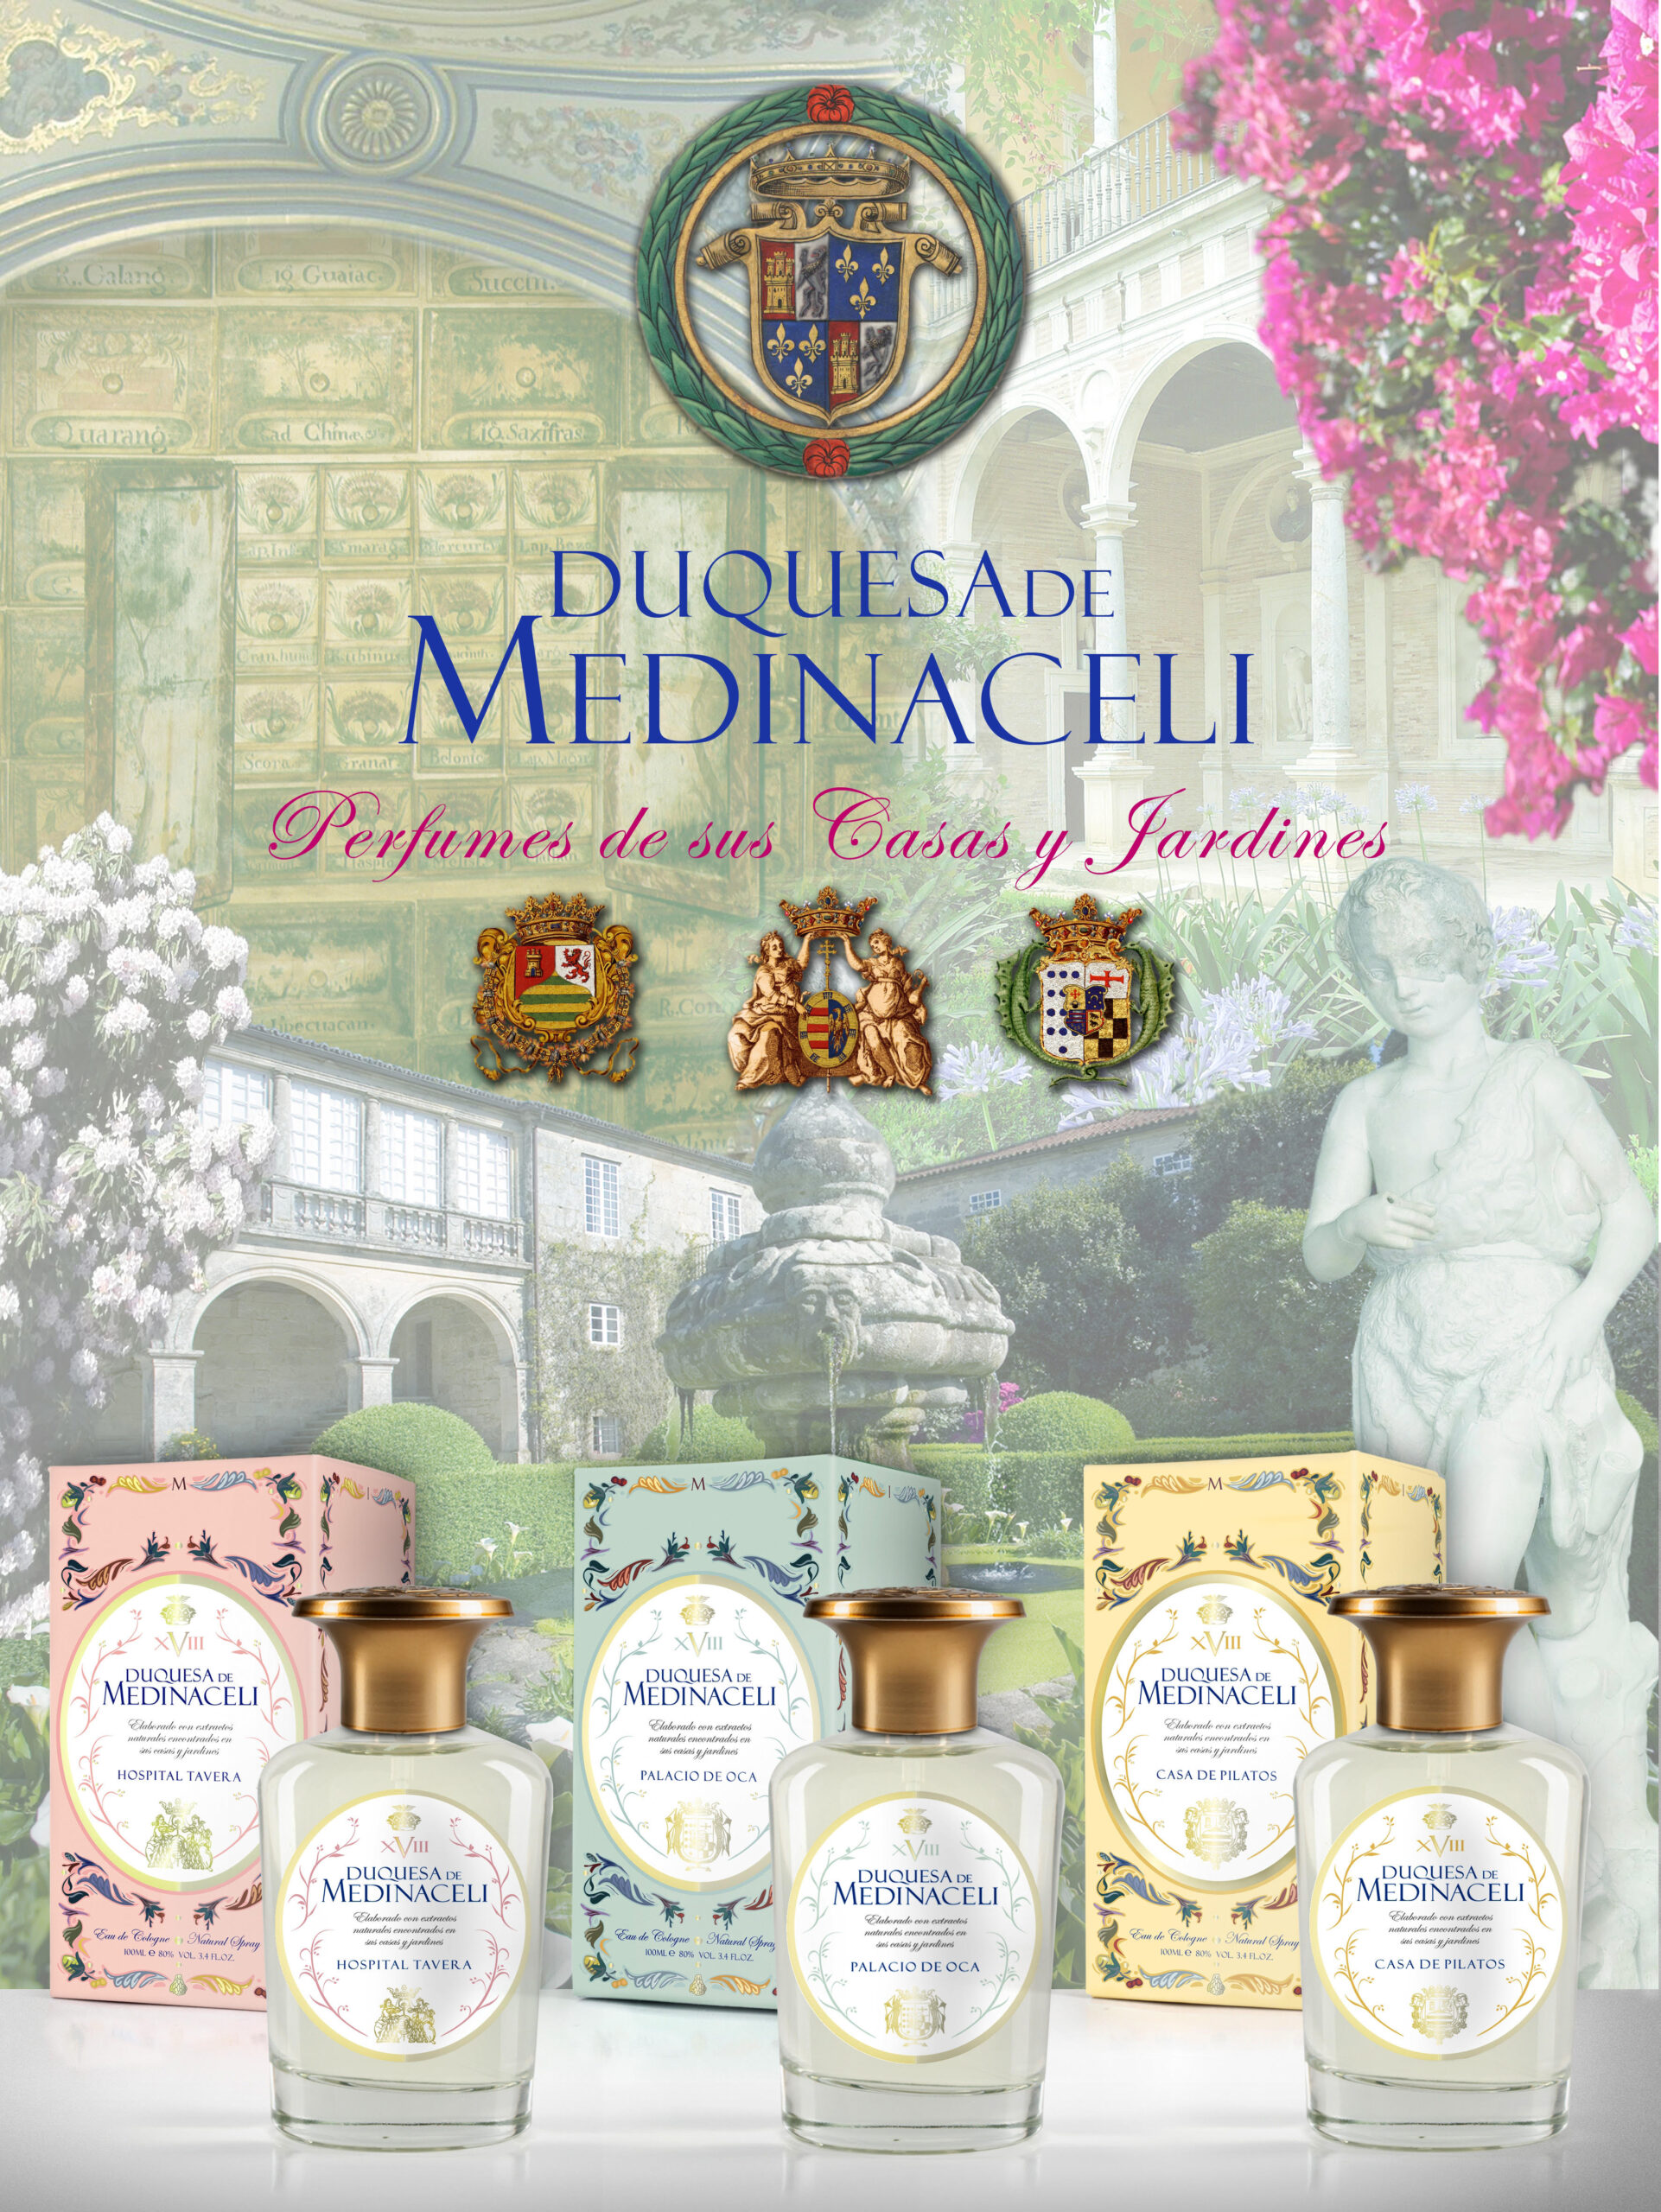 "The Foundation presents an exclusive line of "Duquesa de Medinaceli" products.